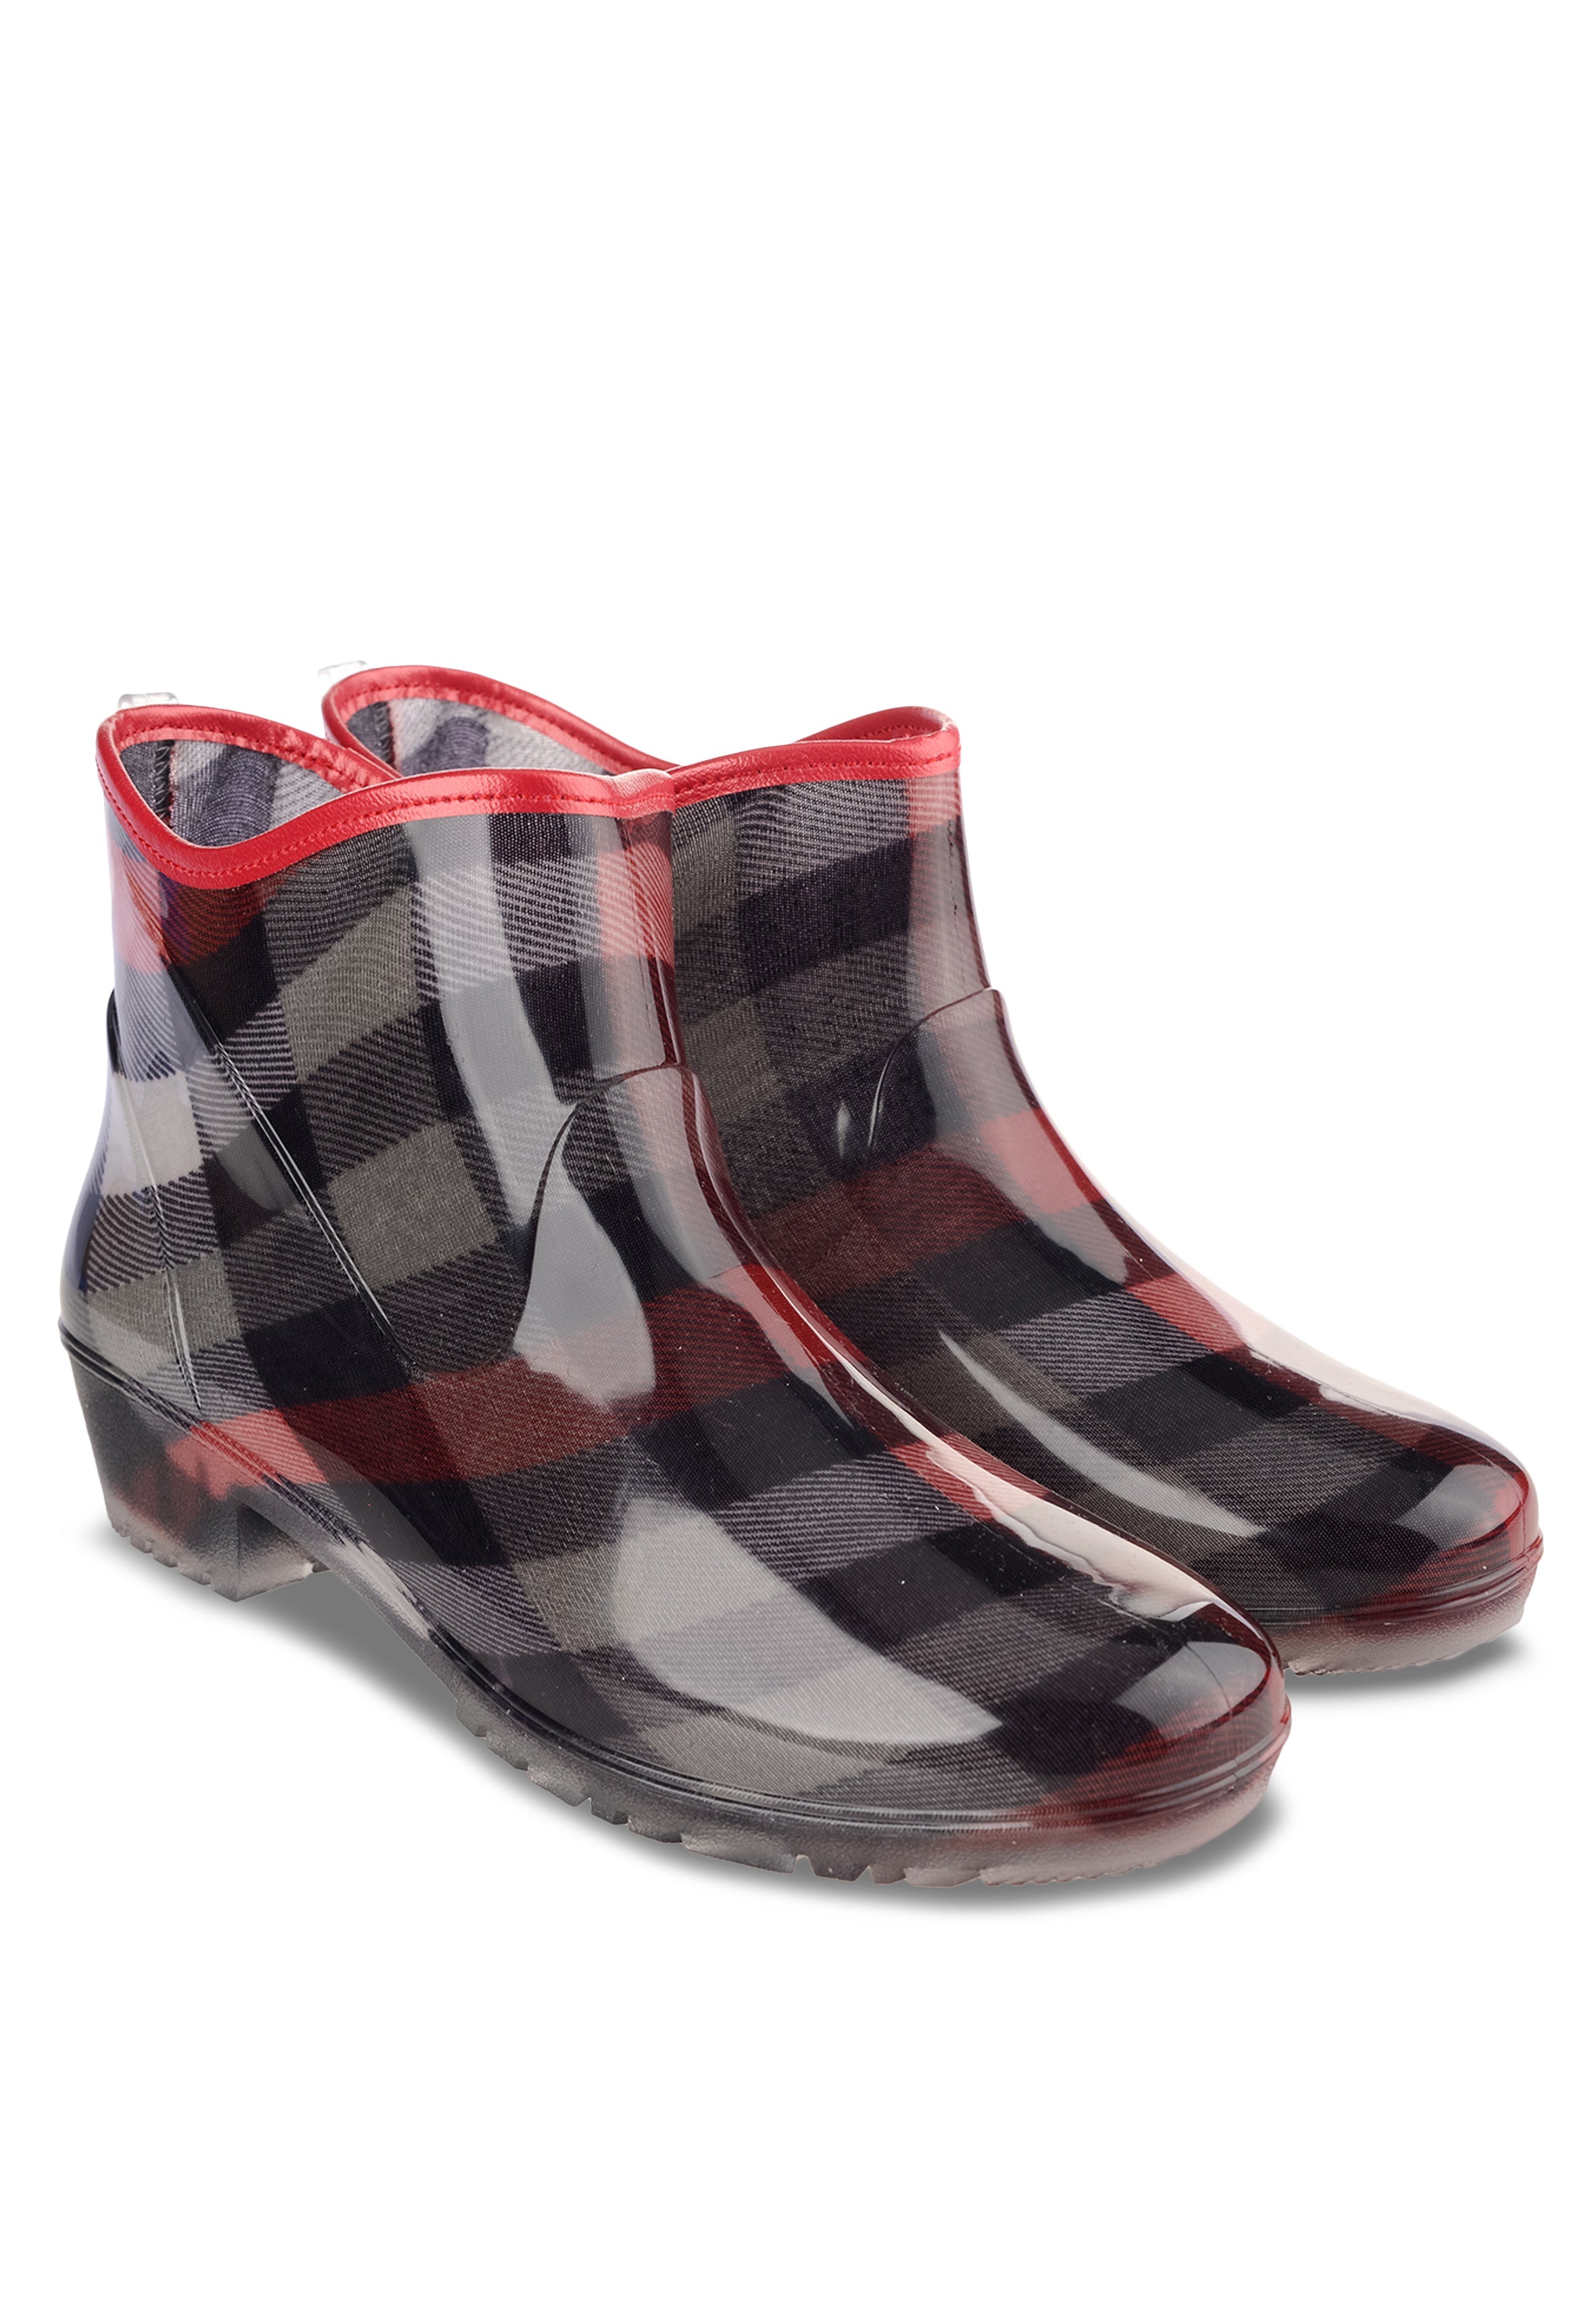 Pattern Classic Lady Rain Boots with Heels-wellshoe hk-BK-JP Size-3: 36S-偉豐鞋 WELL SHOE HK-Well Shoe-偉豐鞋-偉豐網-荃灣鞋店-Functional shoes-Hong Kong Tsuen Wan Shoe Store-Tai Wan Shoe-Japan Shoe-高品質功能鞋-台灣進口鞋-日本進口鞋-High-quality shoes-鞋類配件-荃灣進口鞋-香港鞋店-優質鞋類產品-水靴-帆布鞋-廚師鞋-香港鞋品牌-Hong Kong Shoes brand-長者鞋-Hong Kong Rain Boots-Kitchen shoes-Cruthes-Slipper-Well Shoe Hong Kong-Anello-Arriba-休閒鞋-舒適鞋-健康鞋-皮鞋-Healthy shoes-Leather shoes-Hiking shoes